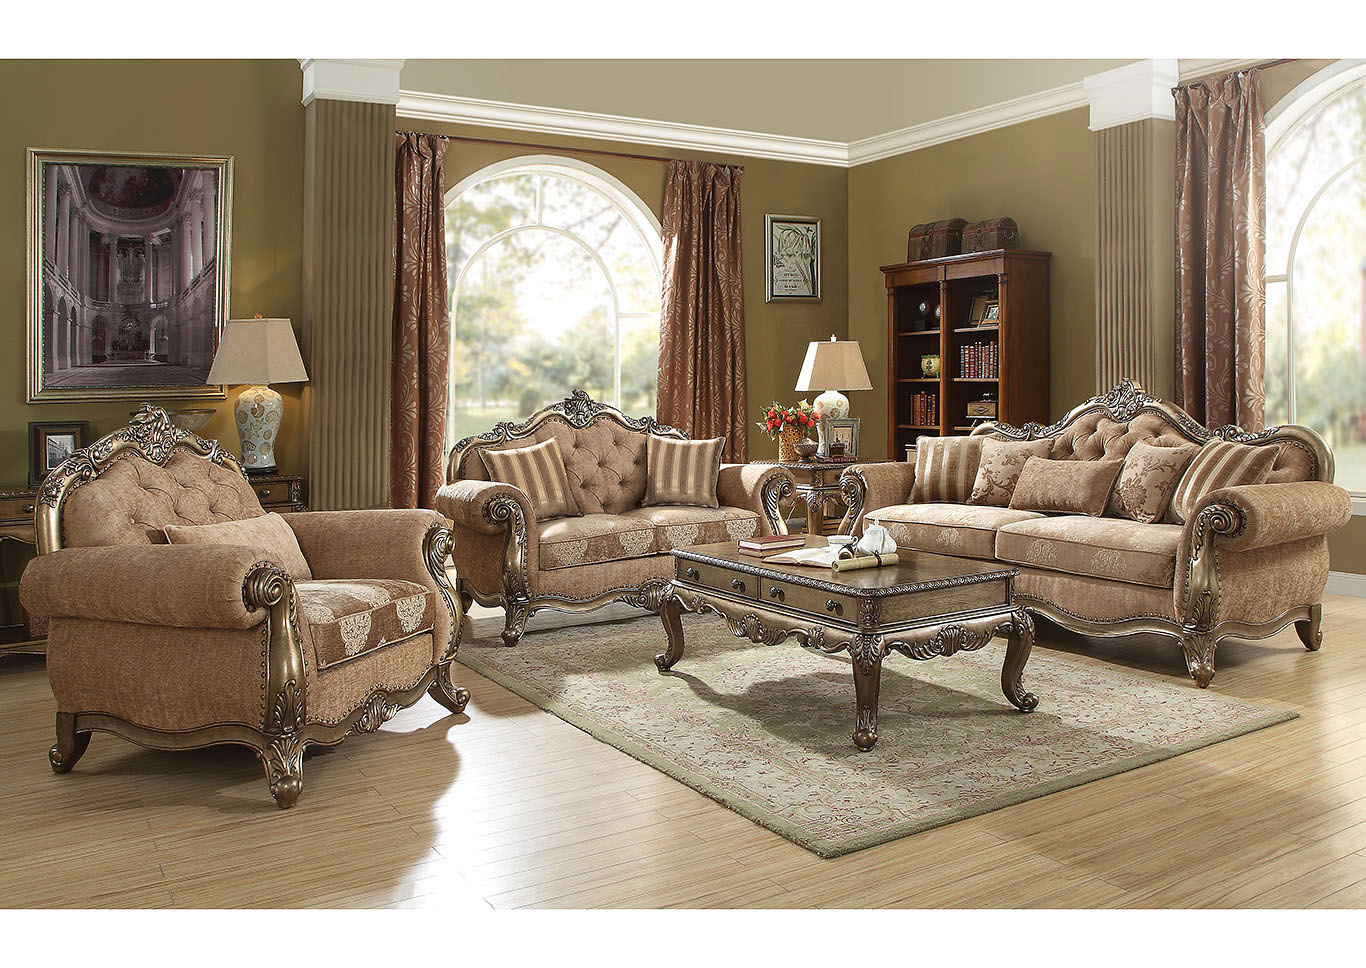 Ragenardus Oak/Brown Upholstered Sofa and Loveseat,Acme